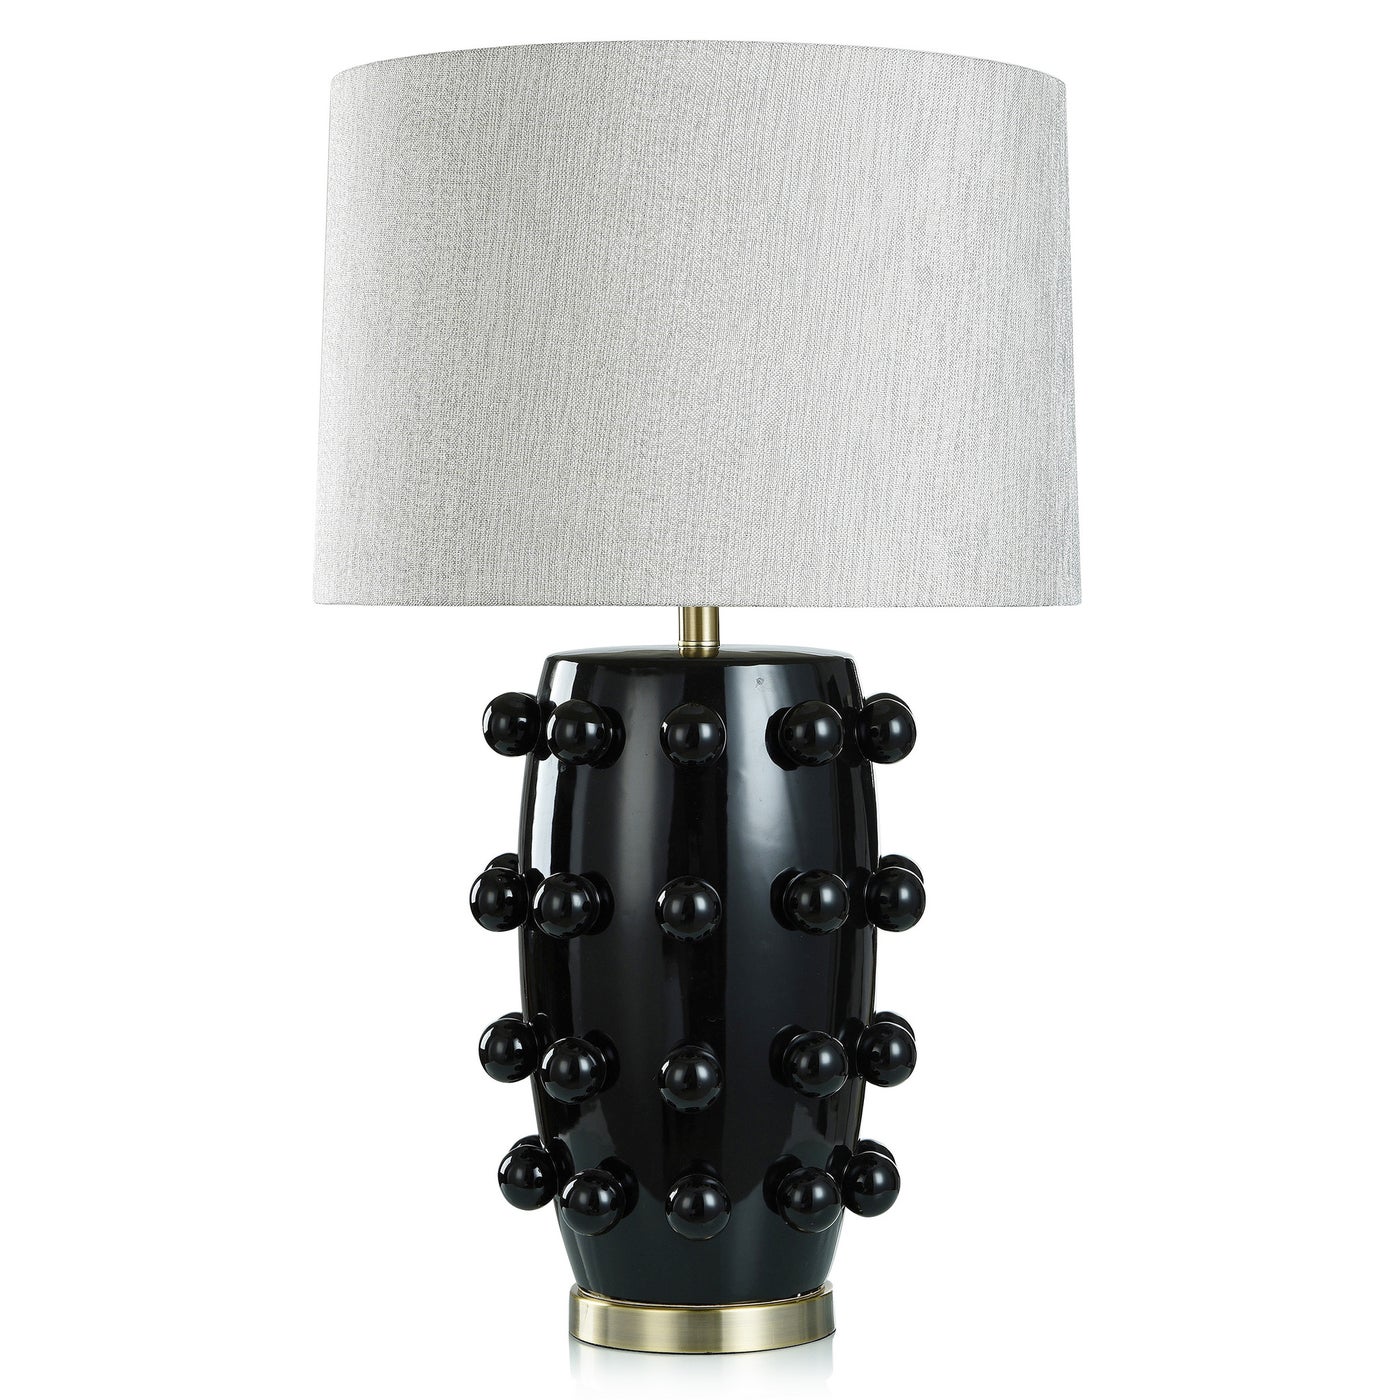 MARNI TABLE LAMP- BLACK, Black Finish on Ceramic Body with Brass Base, Hardback Shade - table lamps